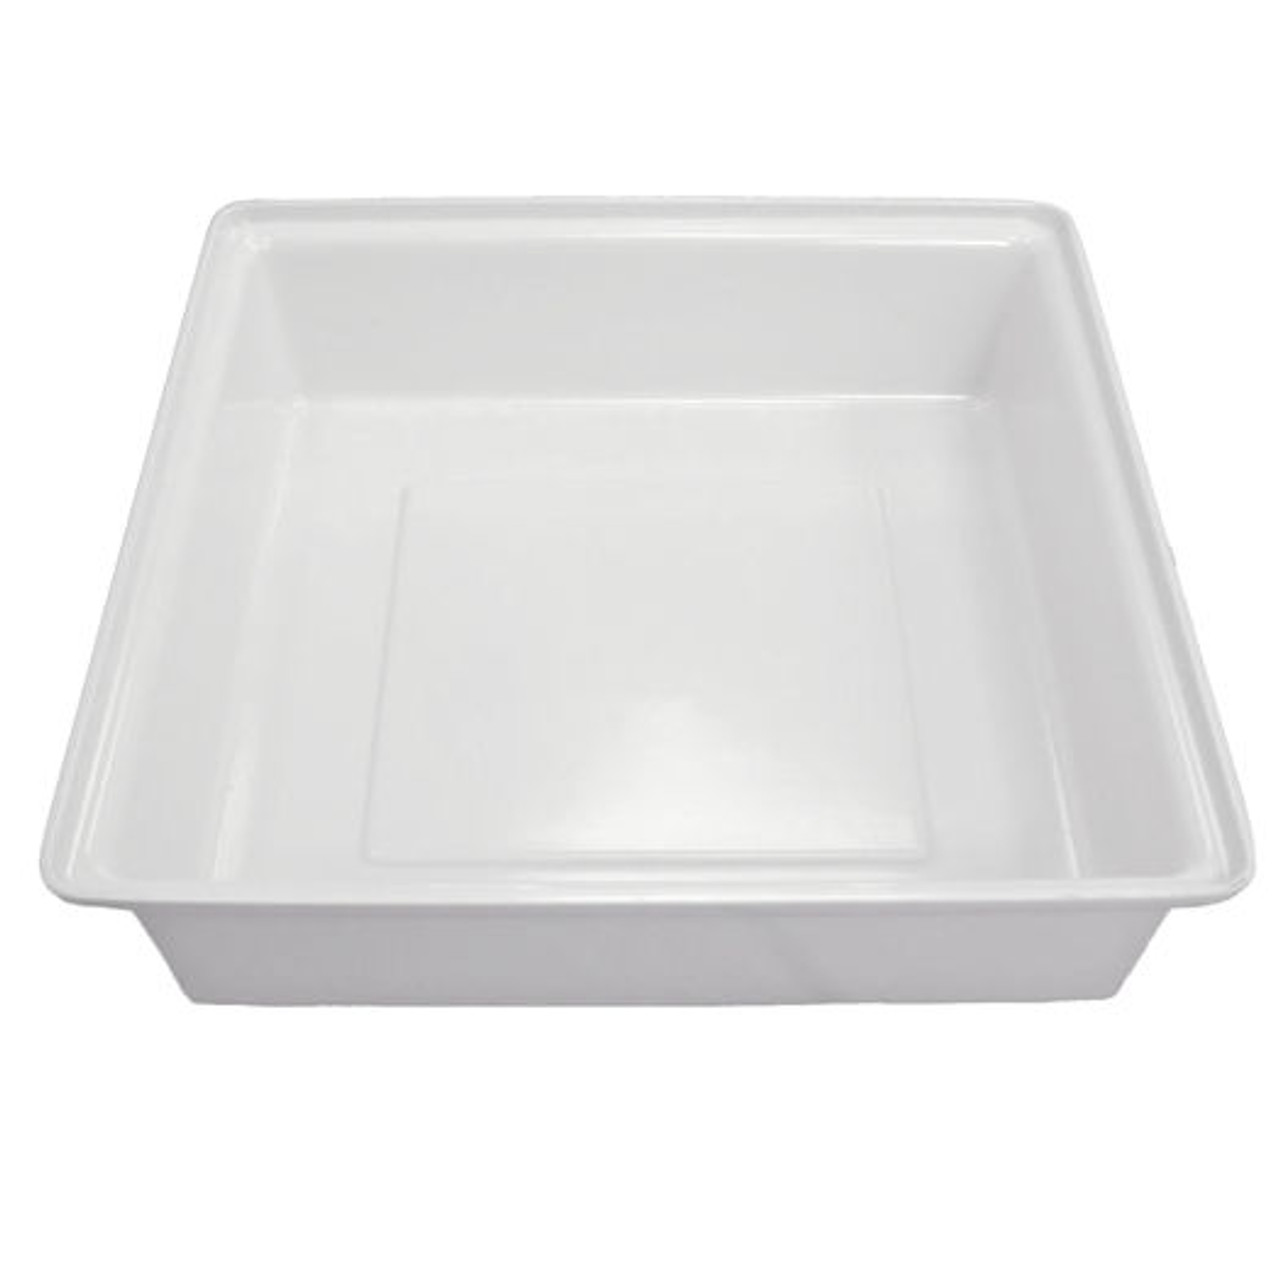 1 Large Quality Serving Display Dish SAN White Square 300 x 300 x 75mm